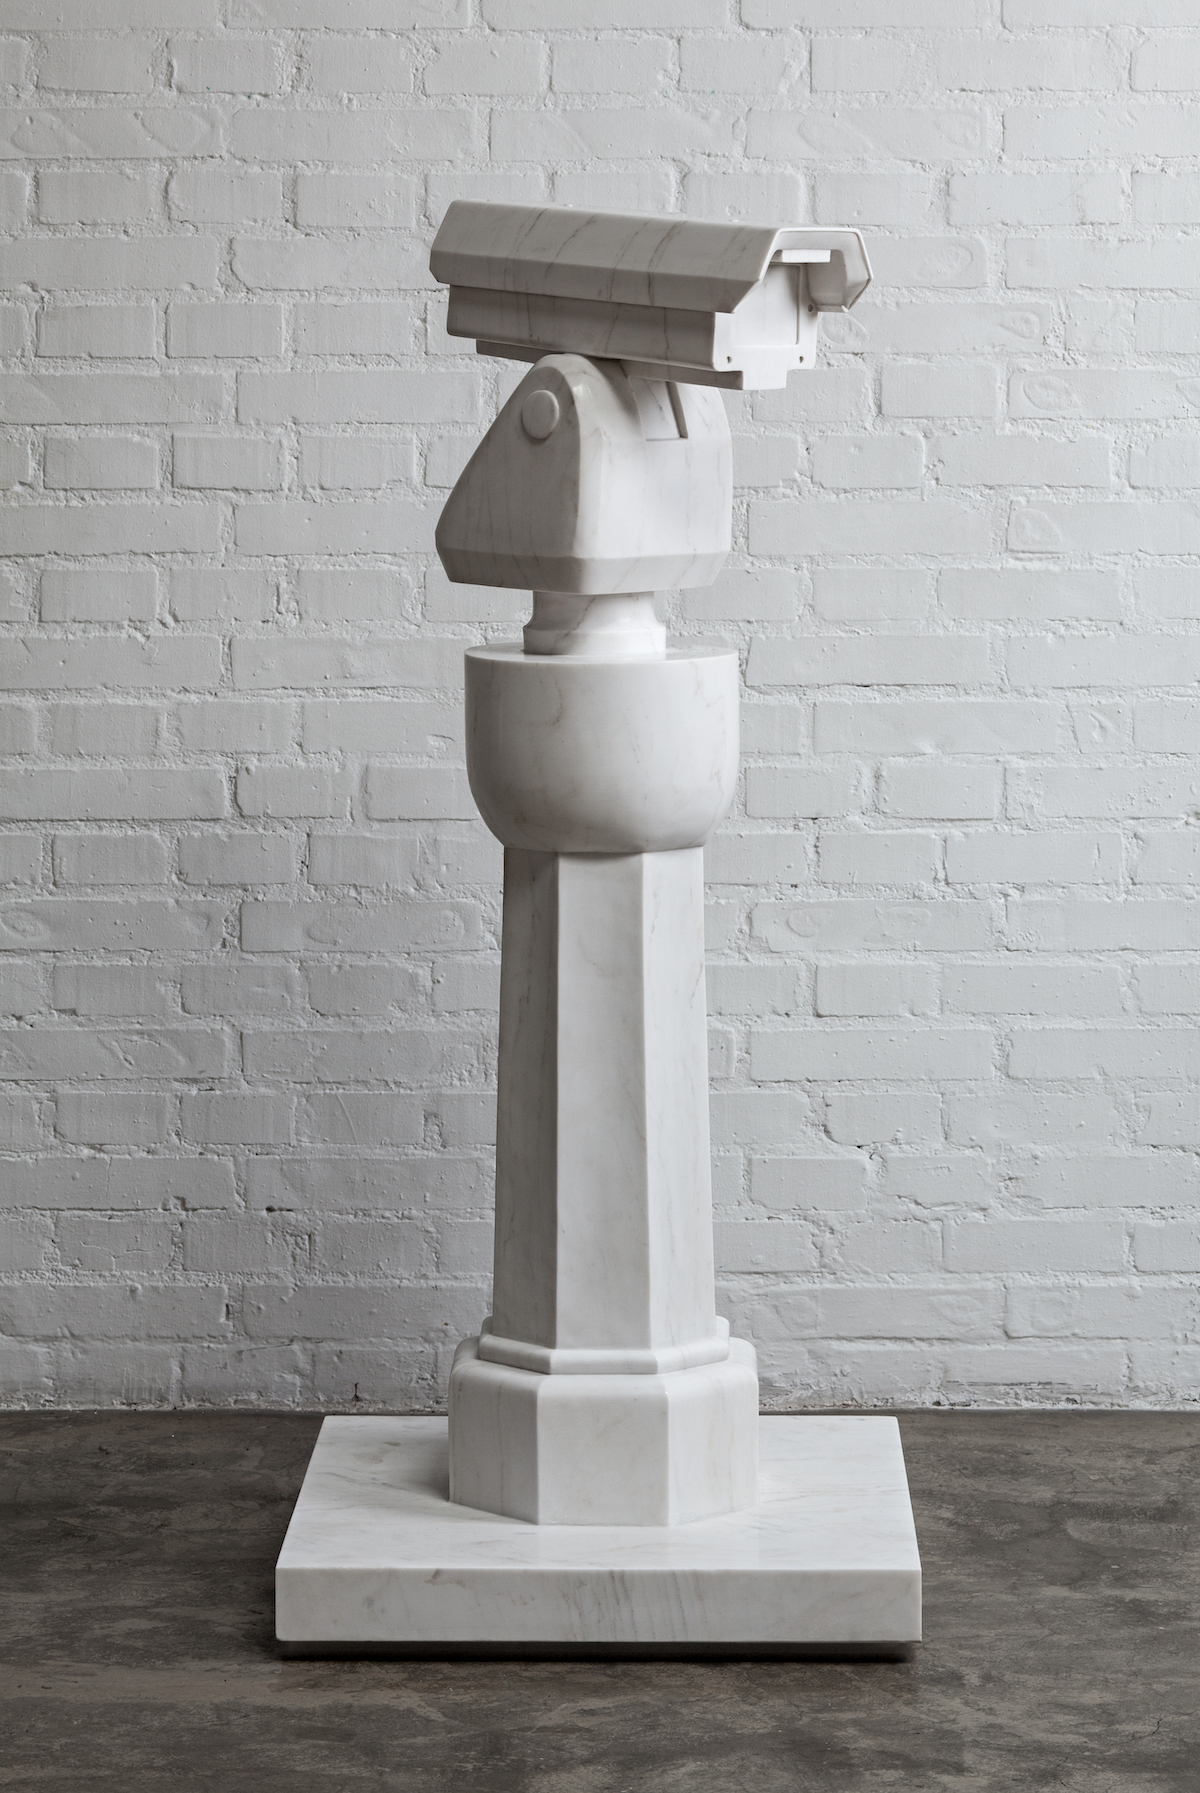 The Wick - Ai Weiwei, Surveillance
Camera with Plinth, 2014.
Courtesy Ai Weiwei Studio.